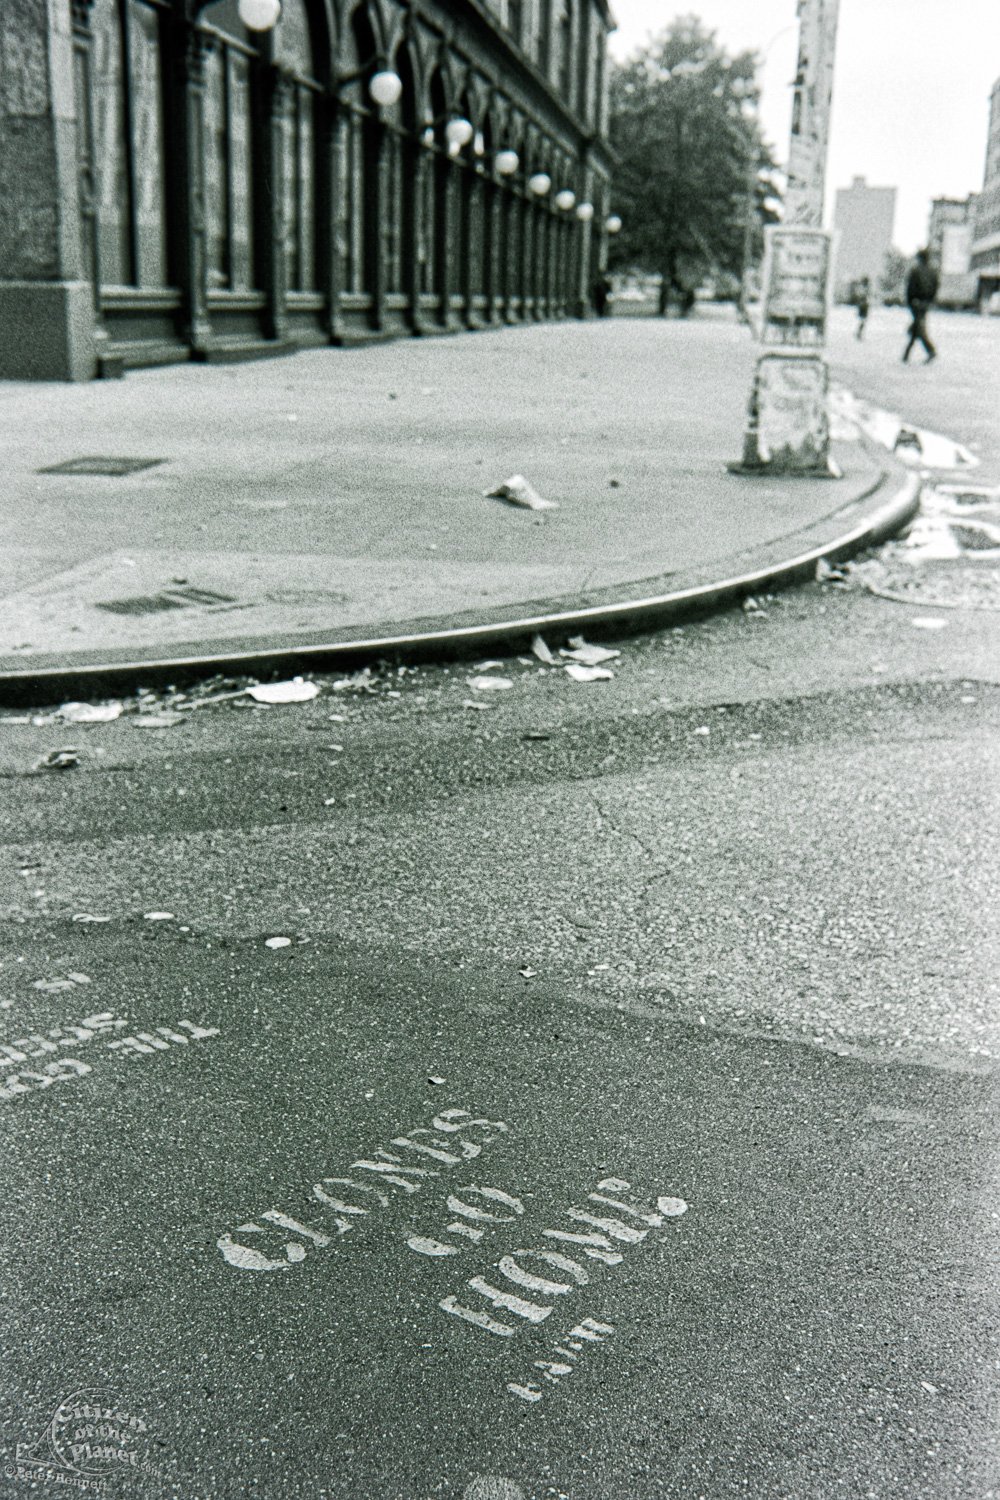  Keith Haring graffiti, Astor Place 